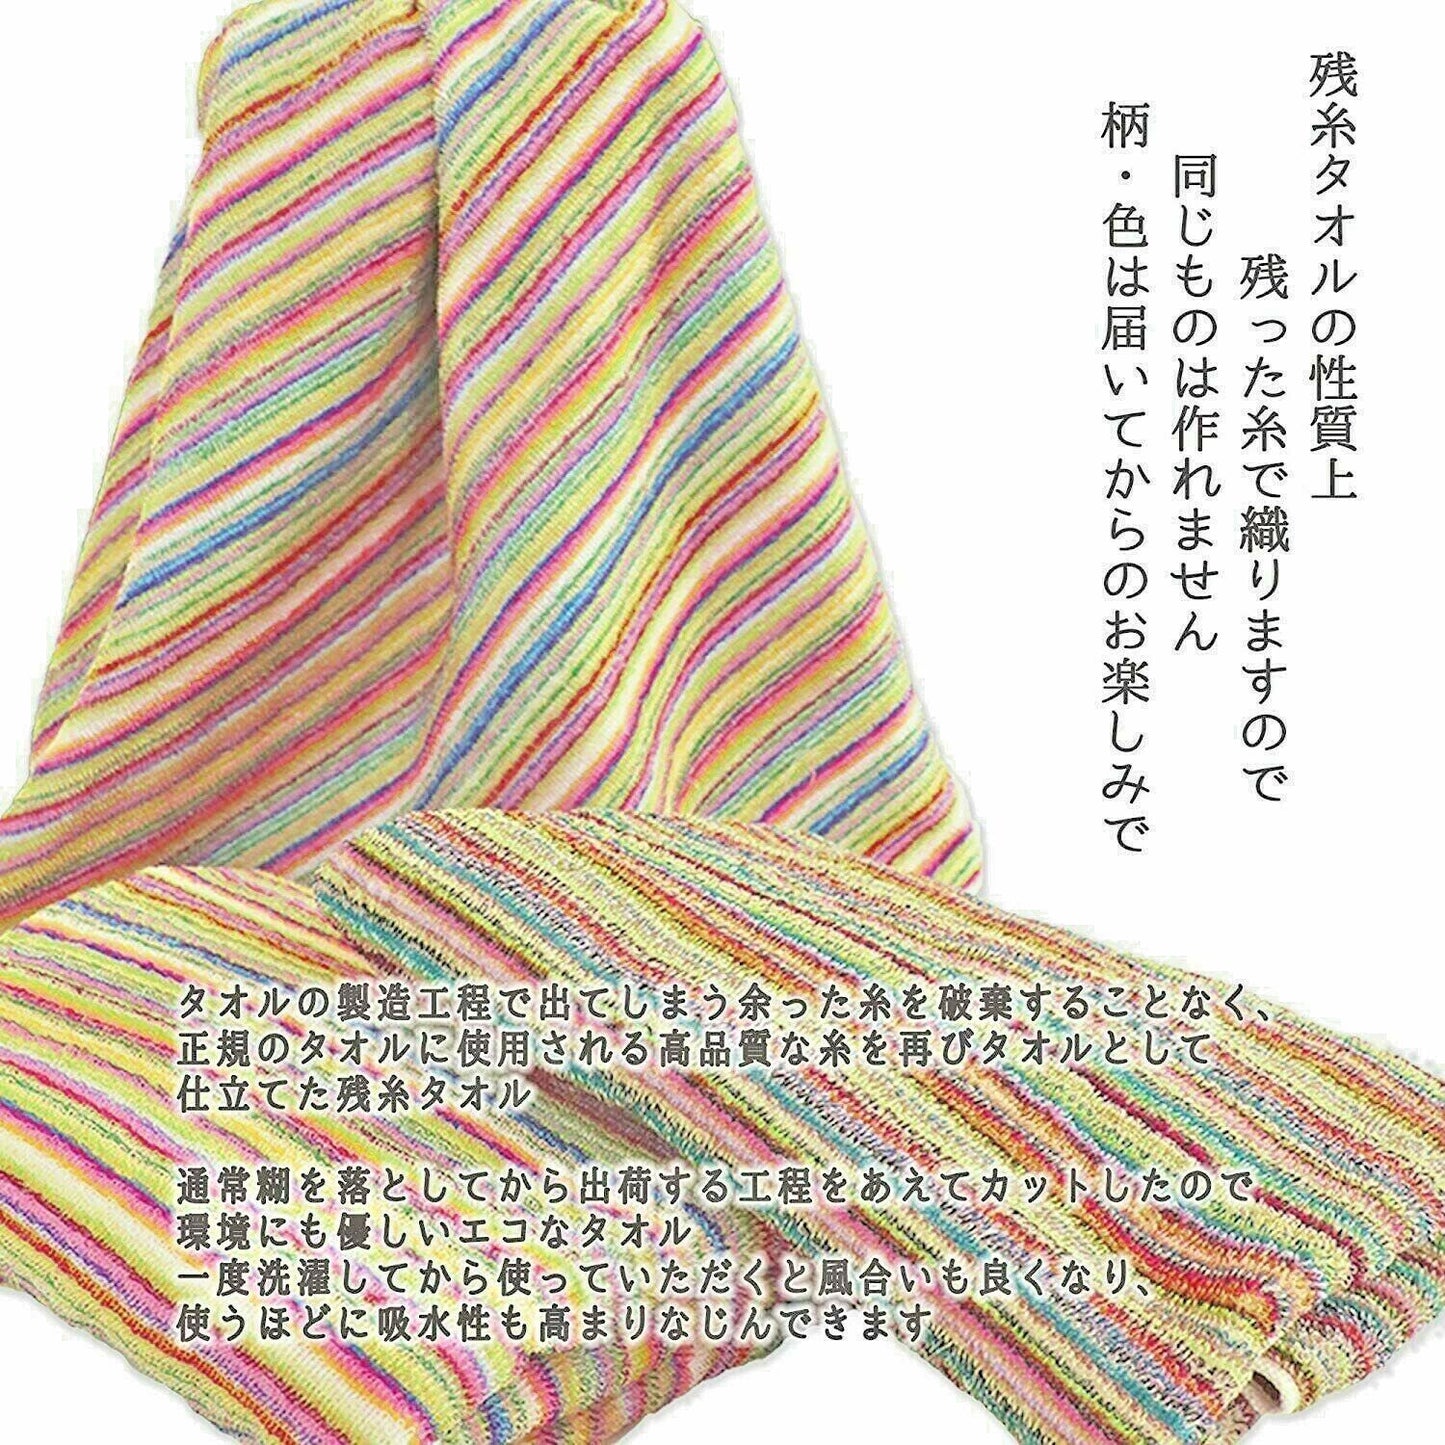 japan Eco friendly towel made from Imabari residual thread Random color pattern